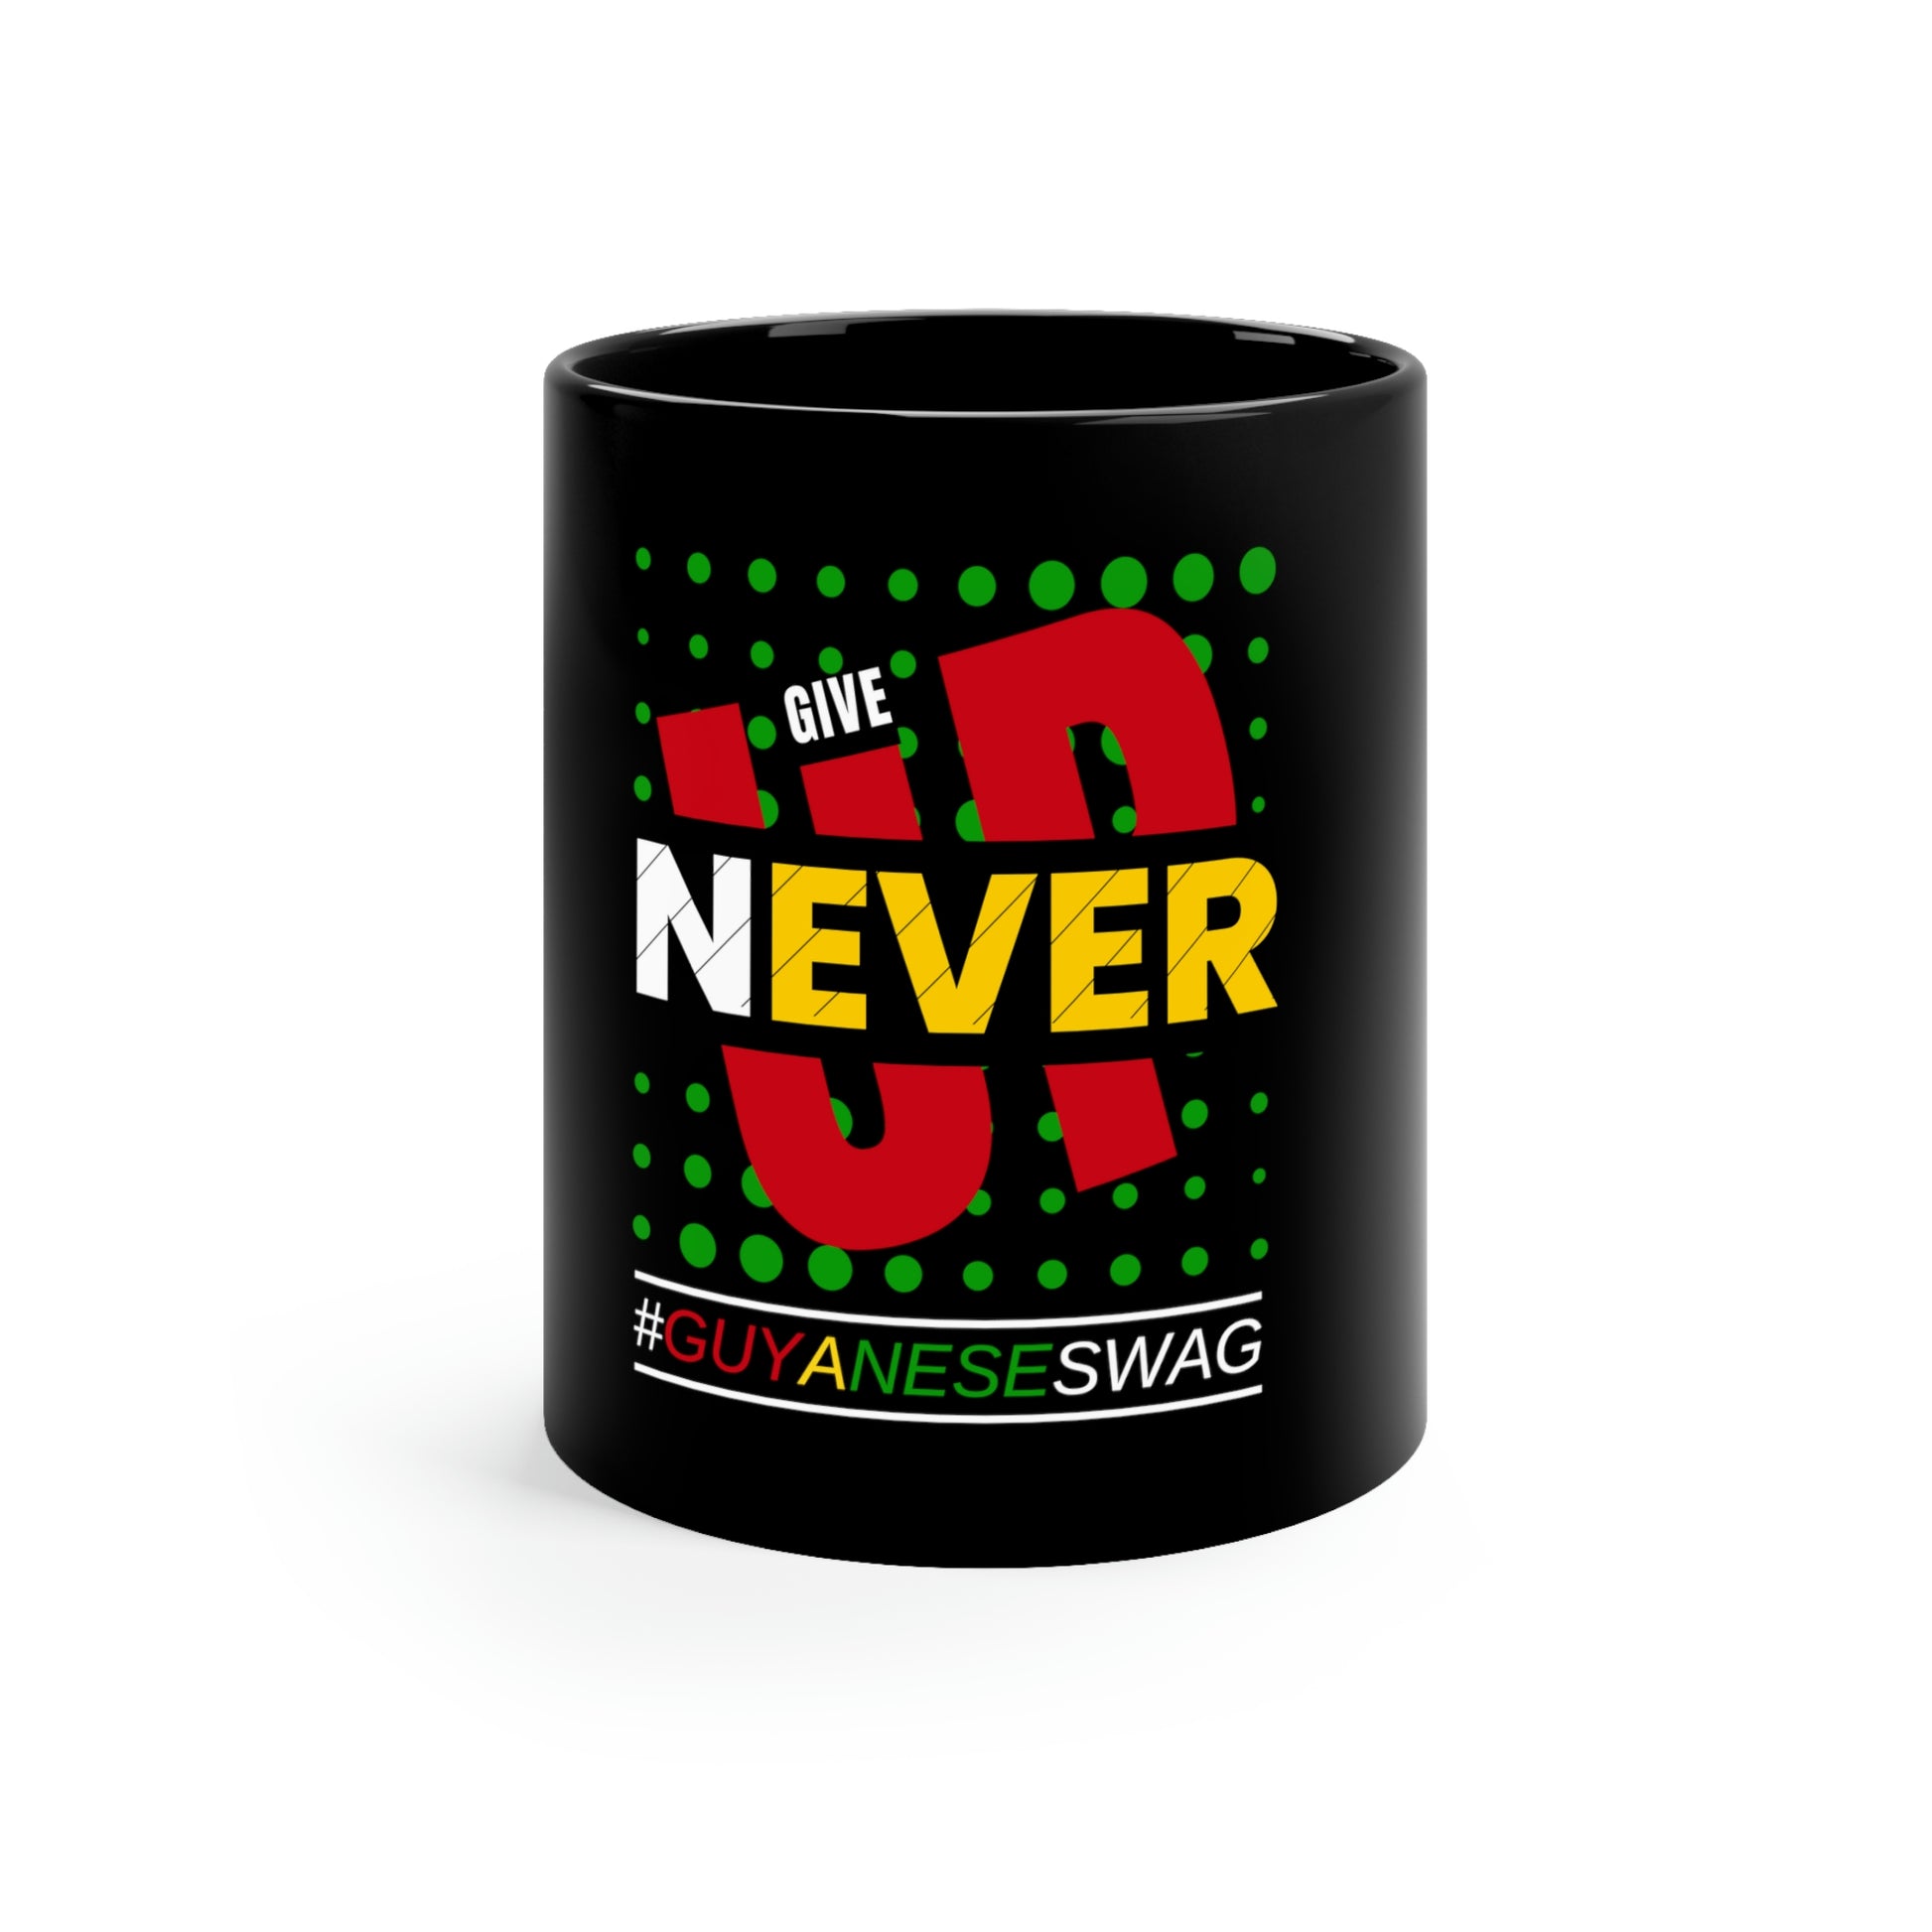 "Never Give Up" 11oz Black Mug by Guyanese Swag.